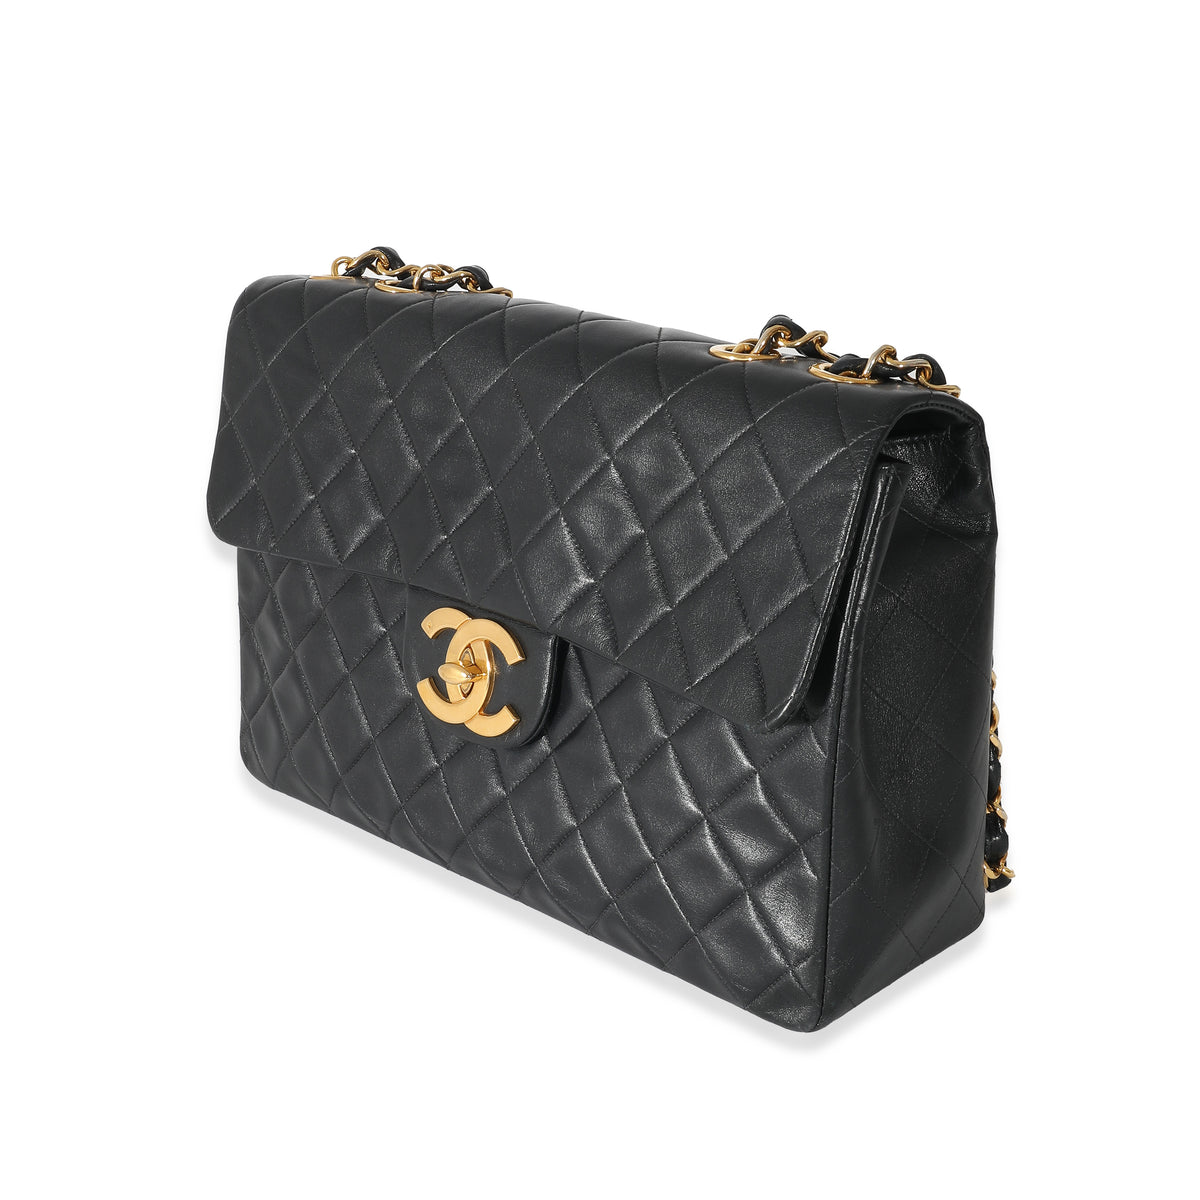 Sold at Auction: Chanel, a Maxi Jumbo XL Flap handbag, cr